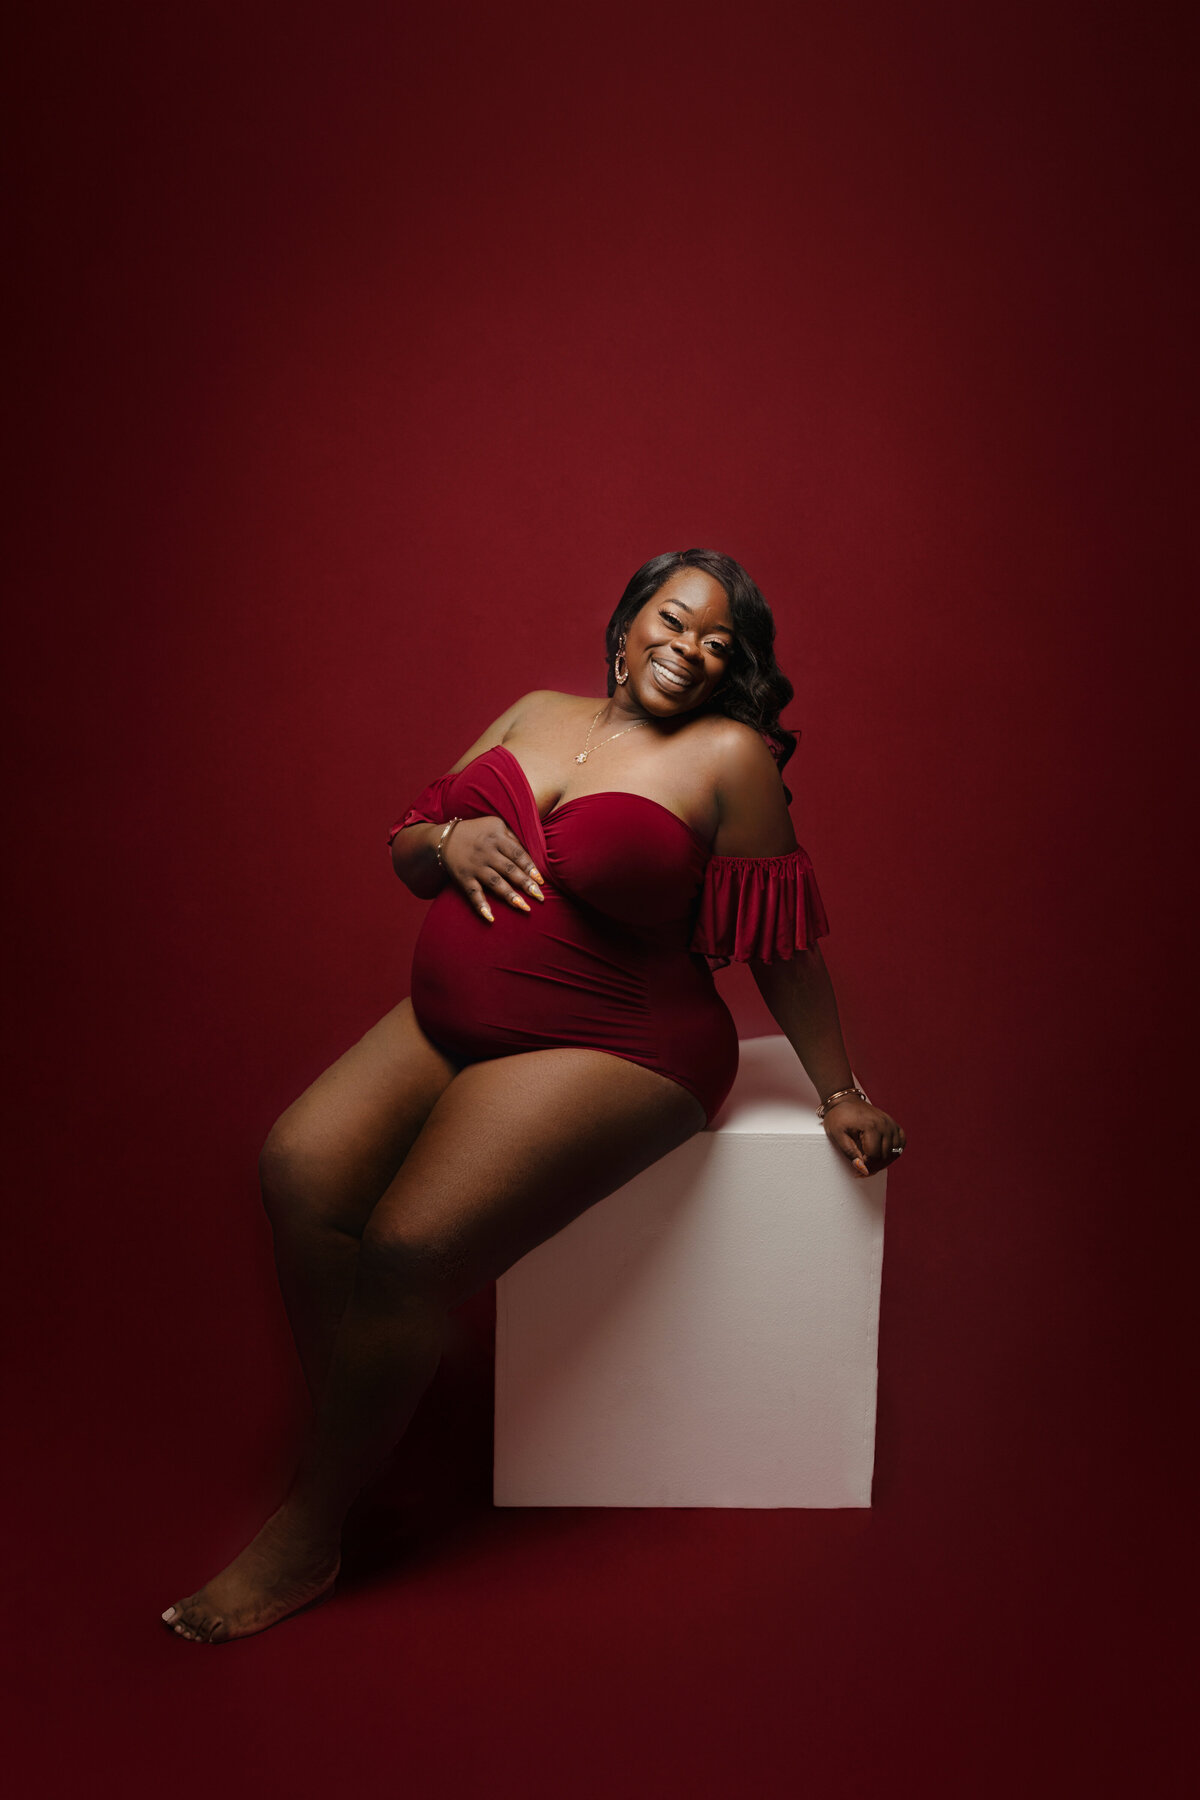 mom in red body suit for pregnancy photos in phoenix arizona maternity studio